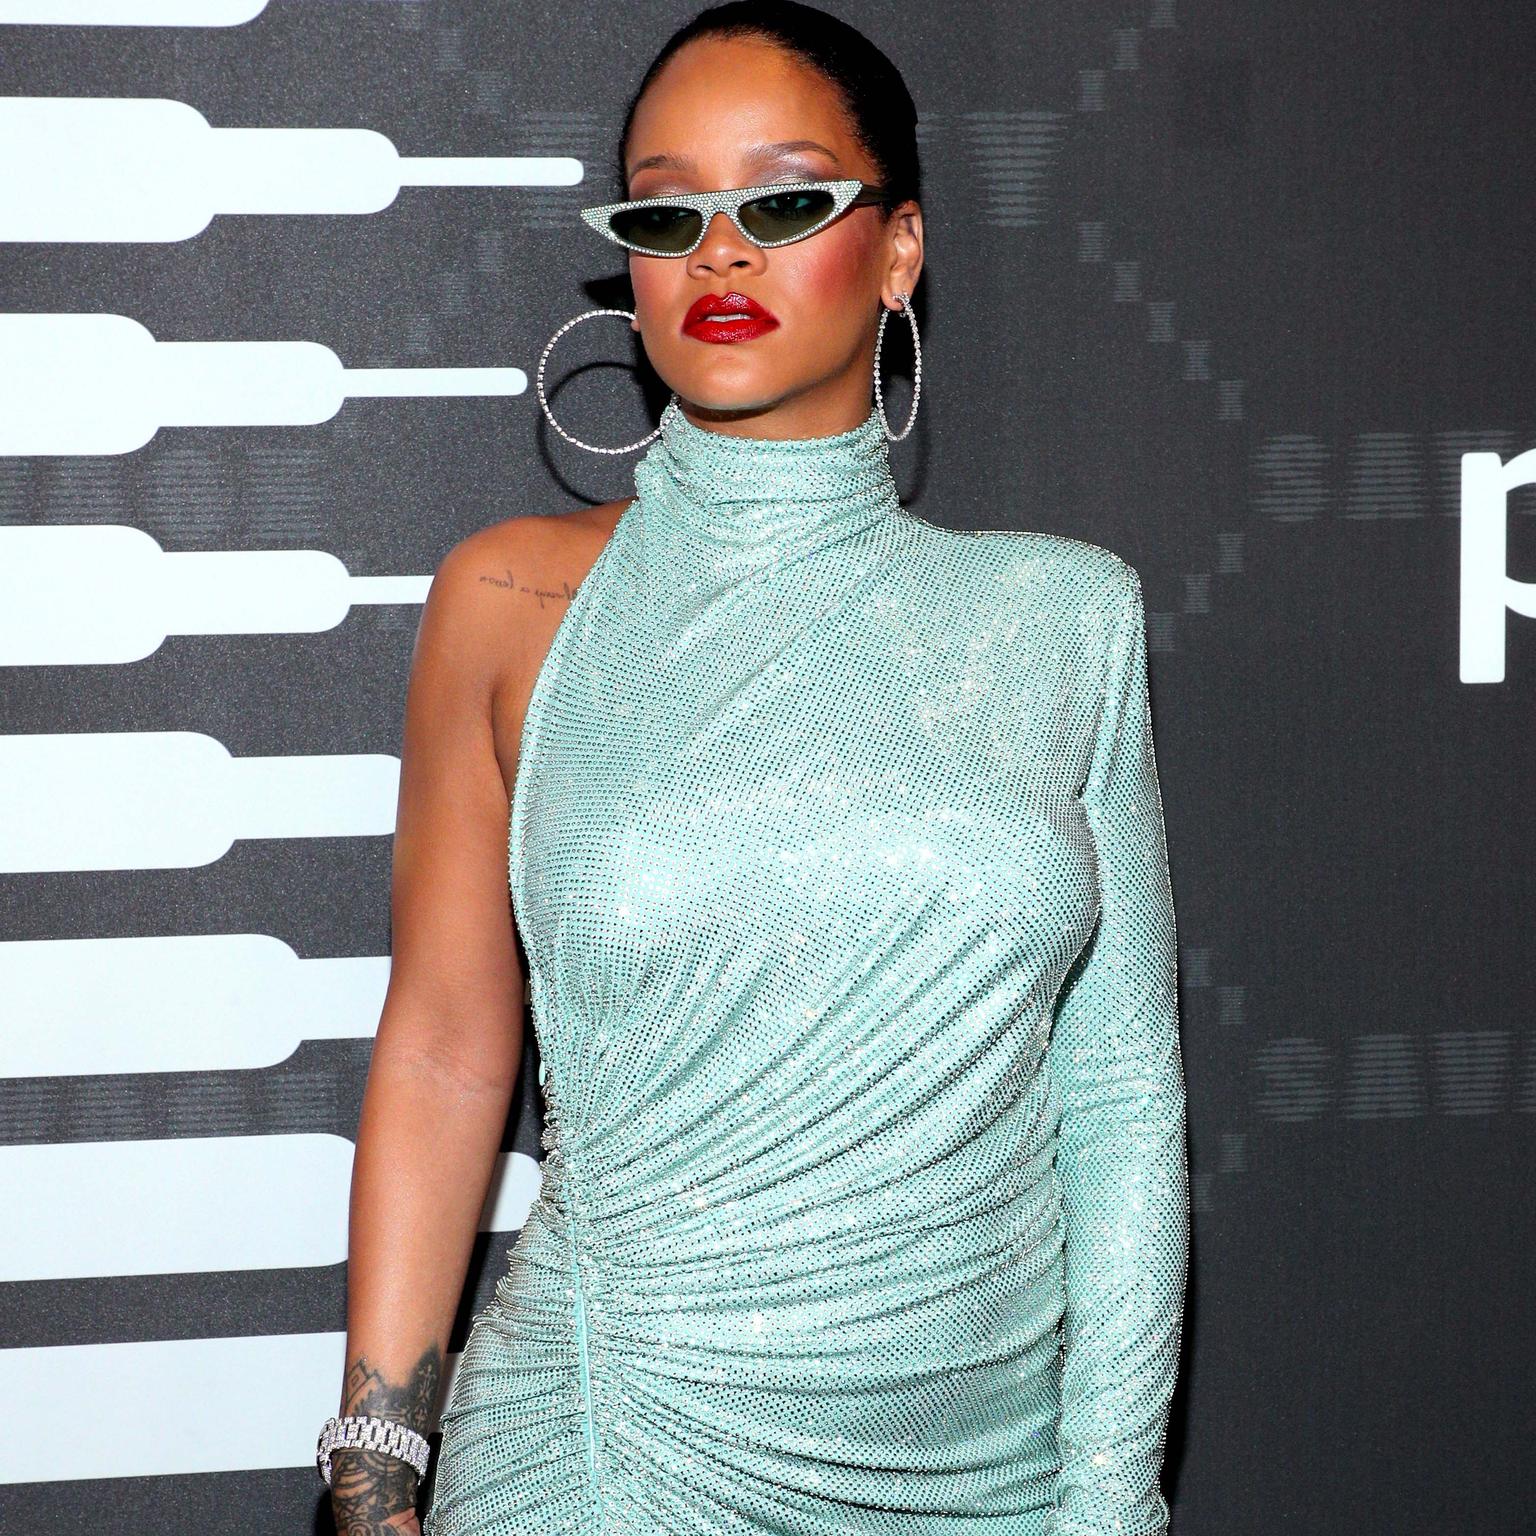 Rihanna in NYC in September 2019